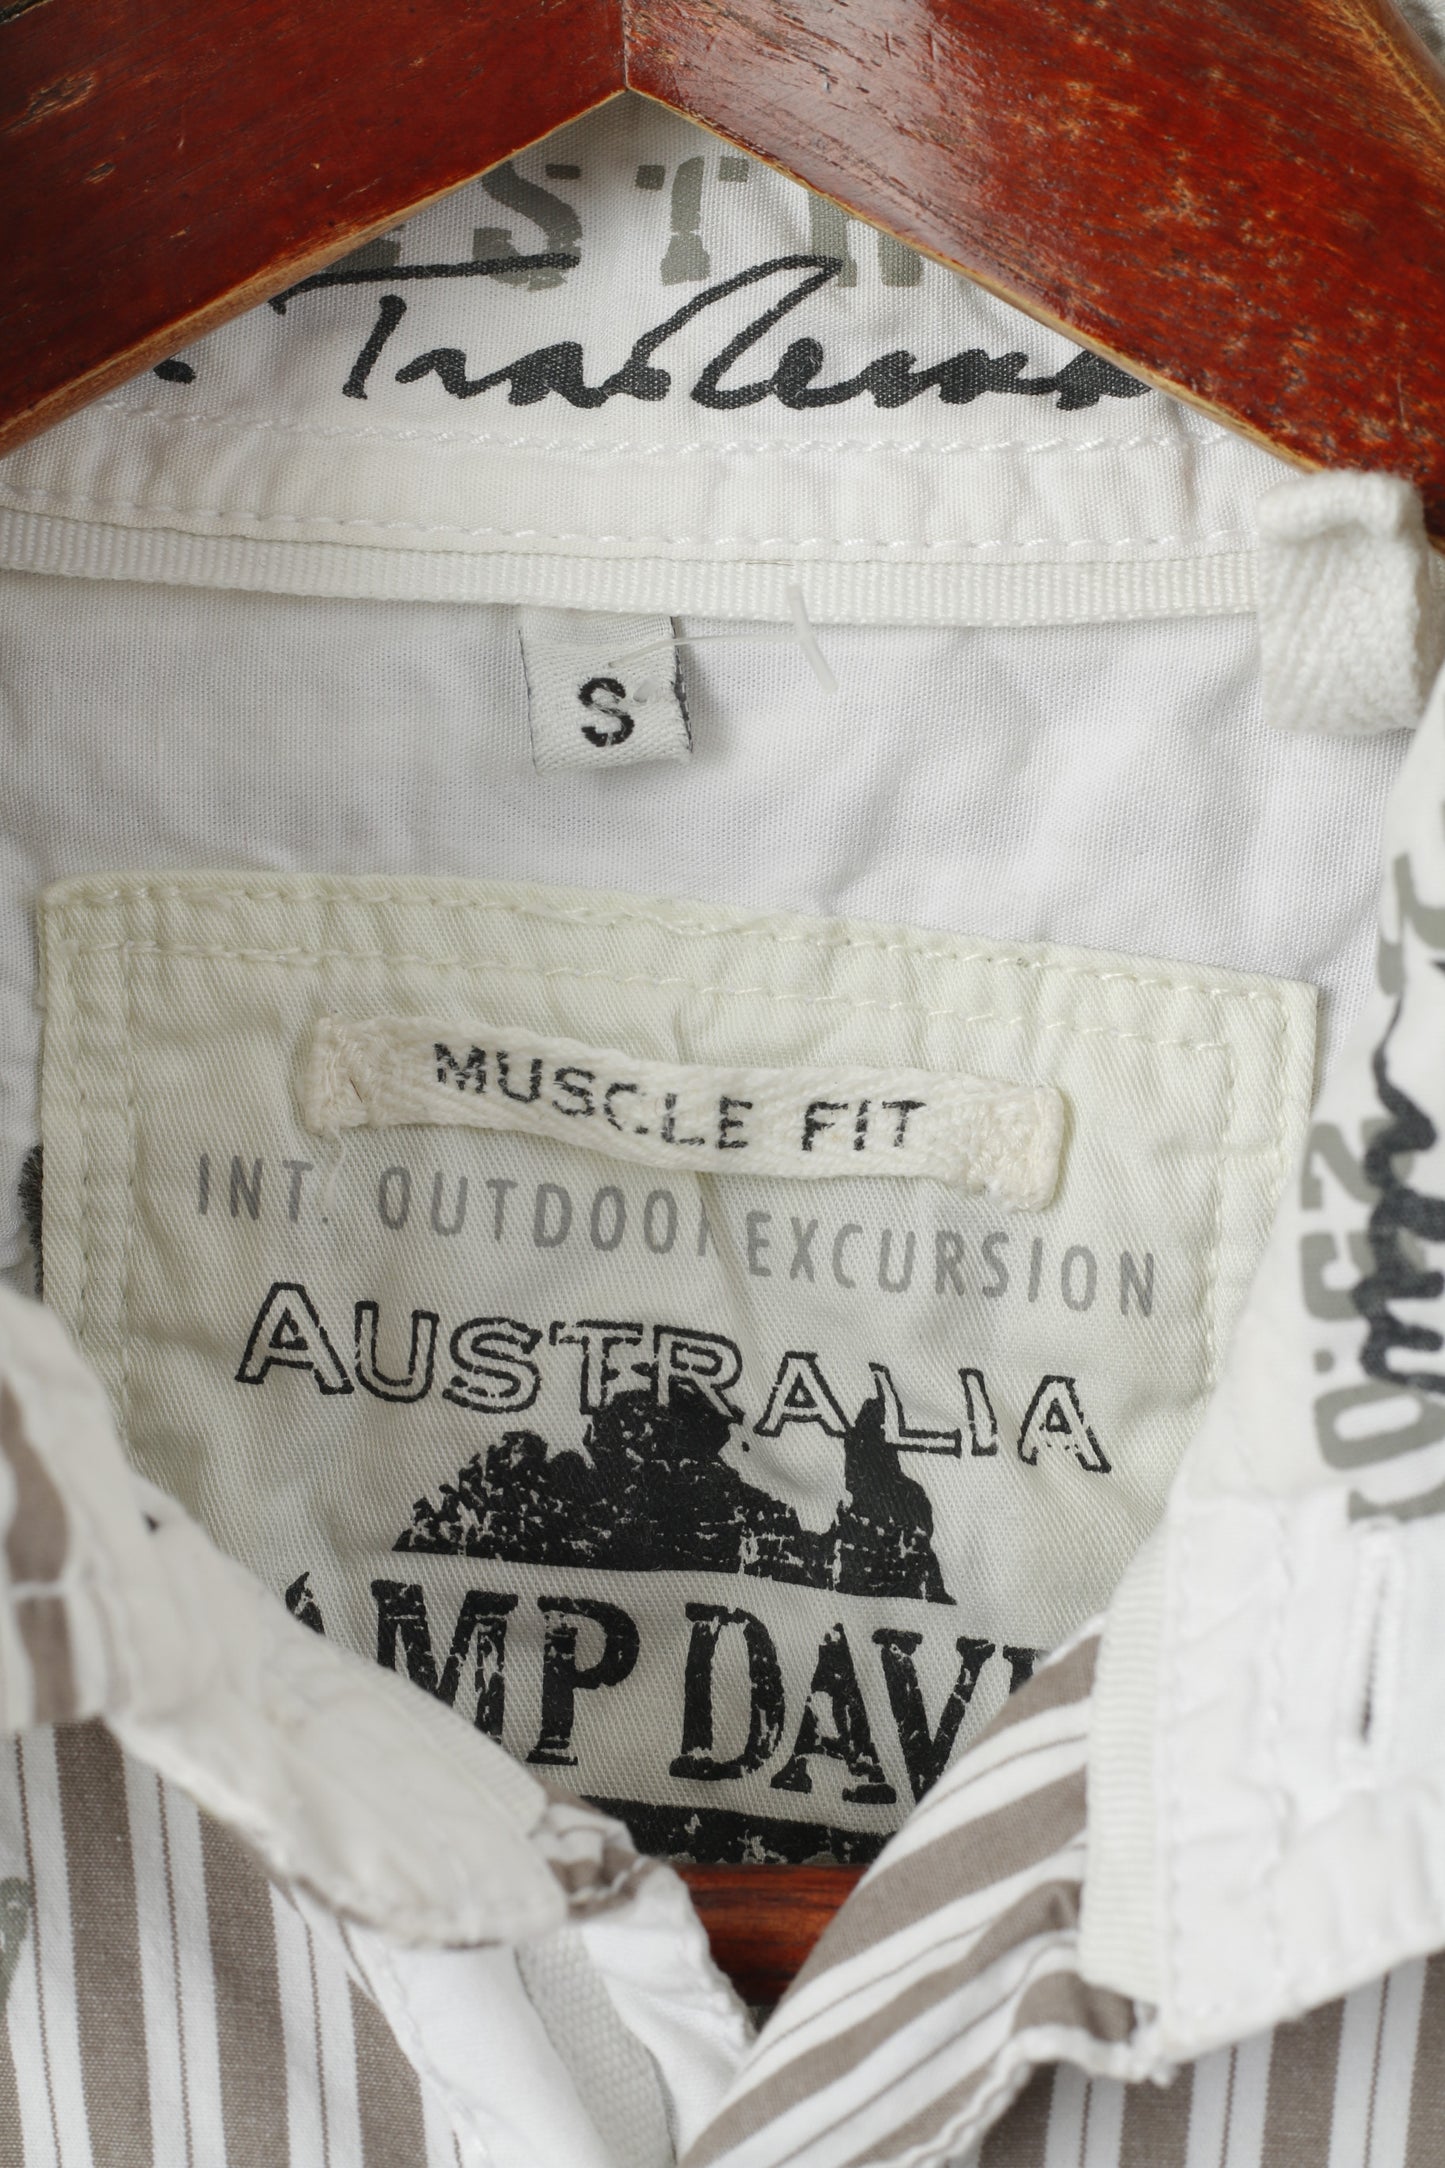 Camp David Men S Casual Shirt Brown Striped Cotton Australia #63 Top